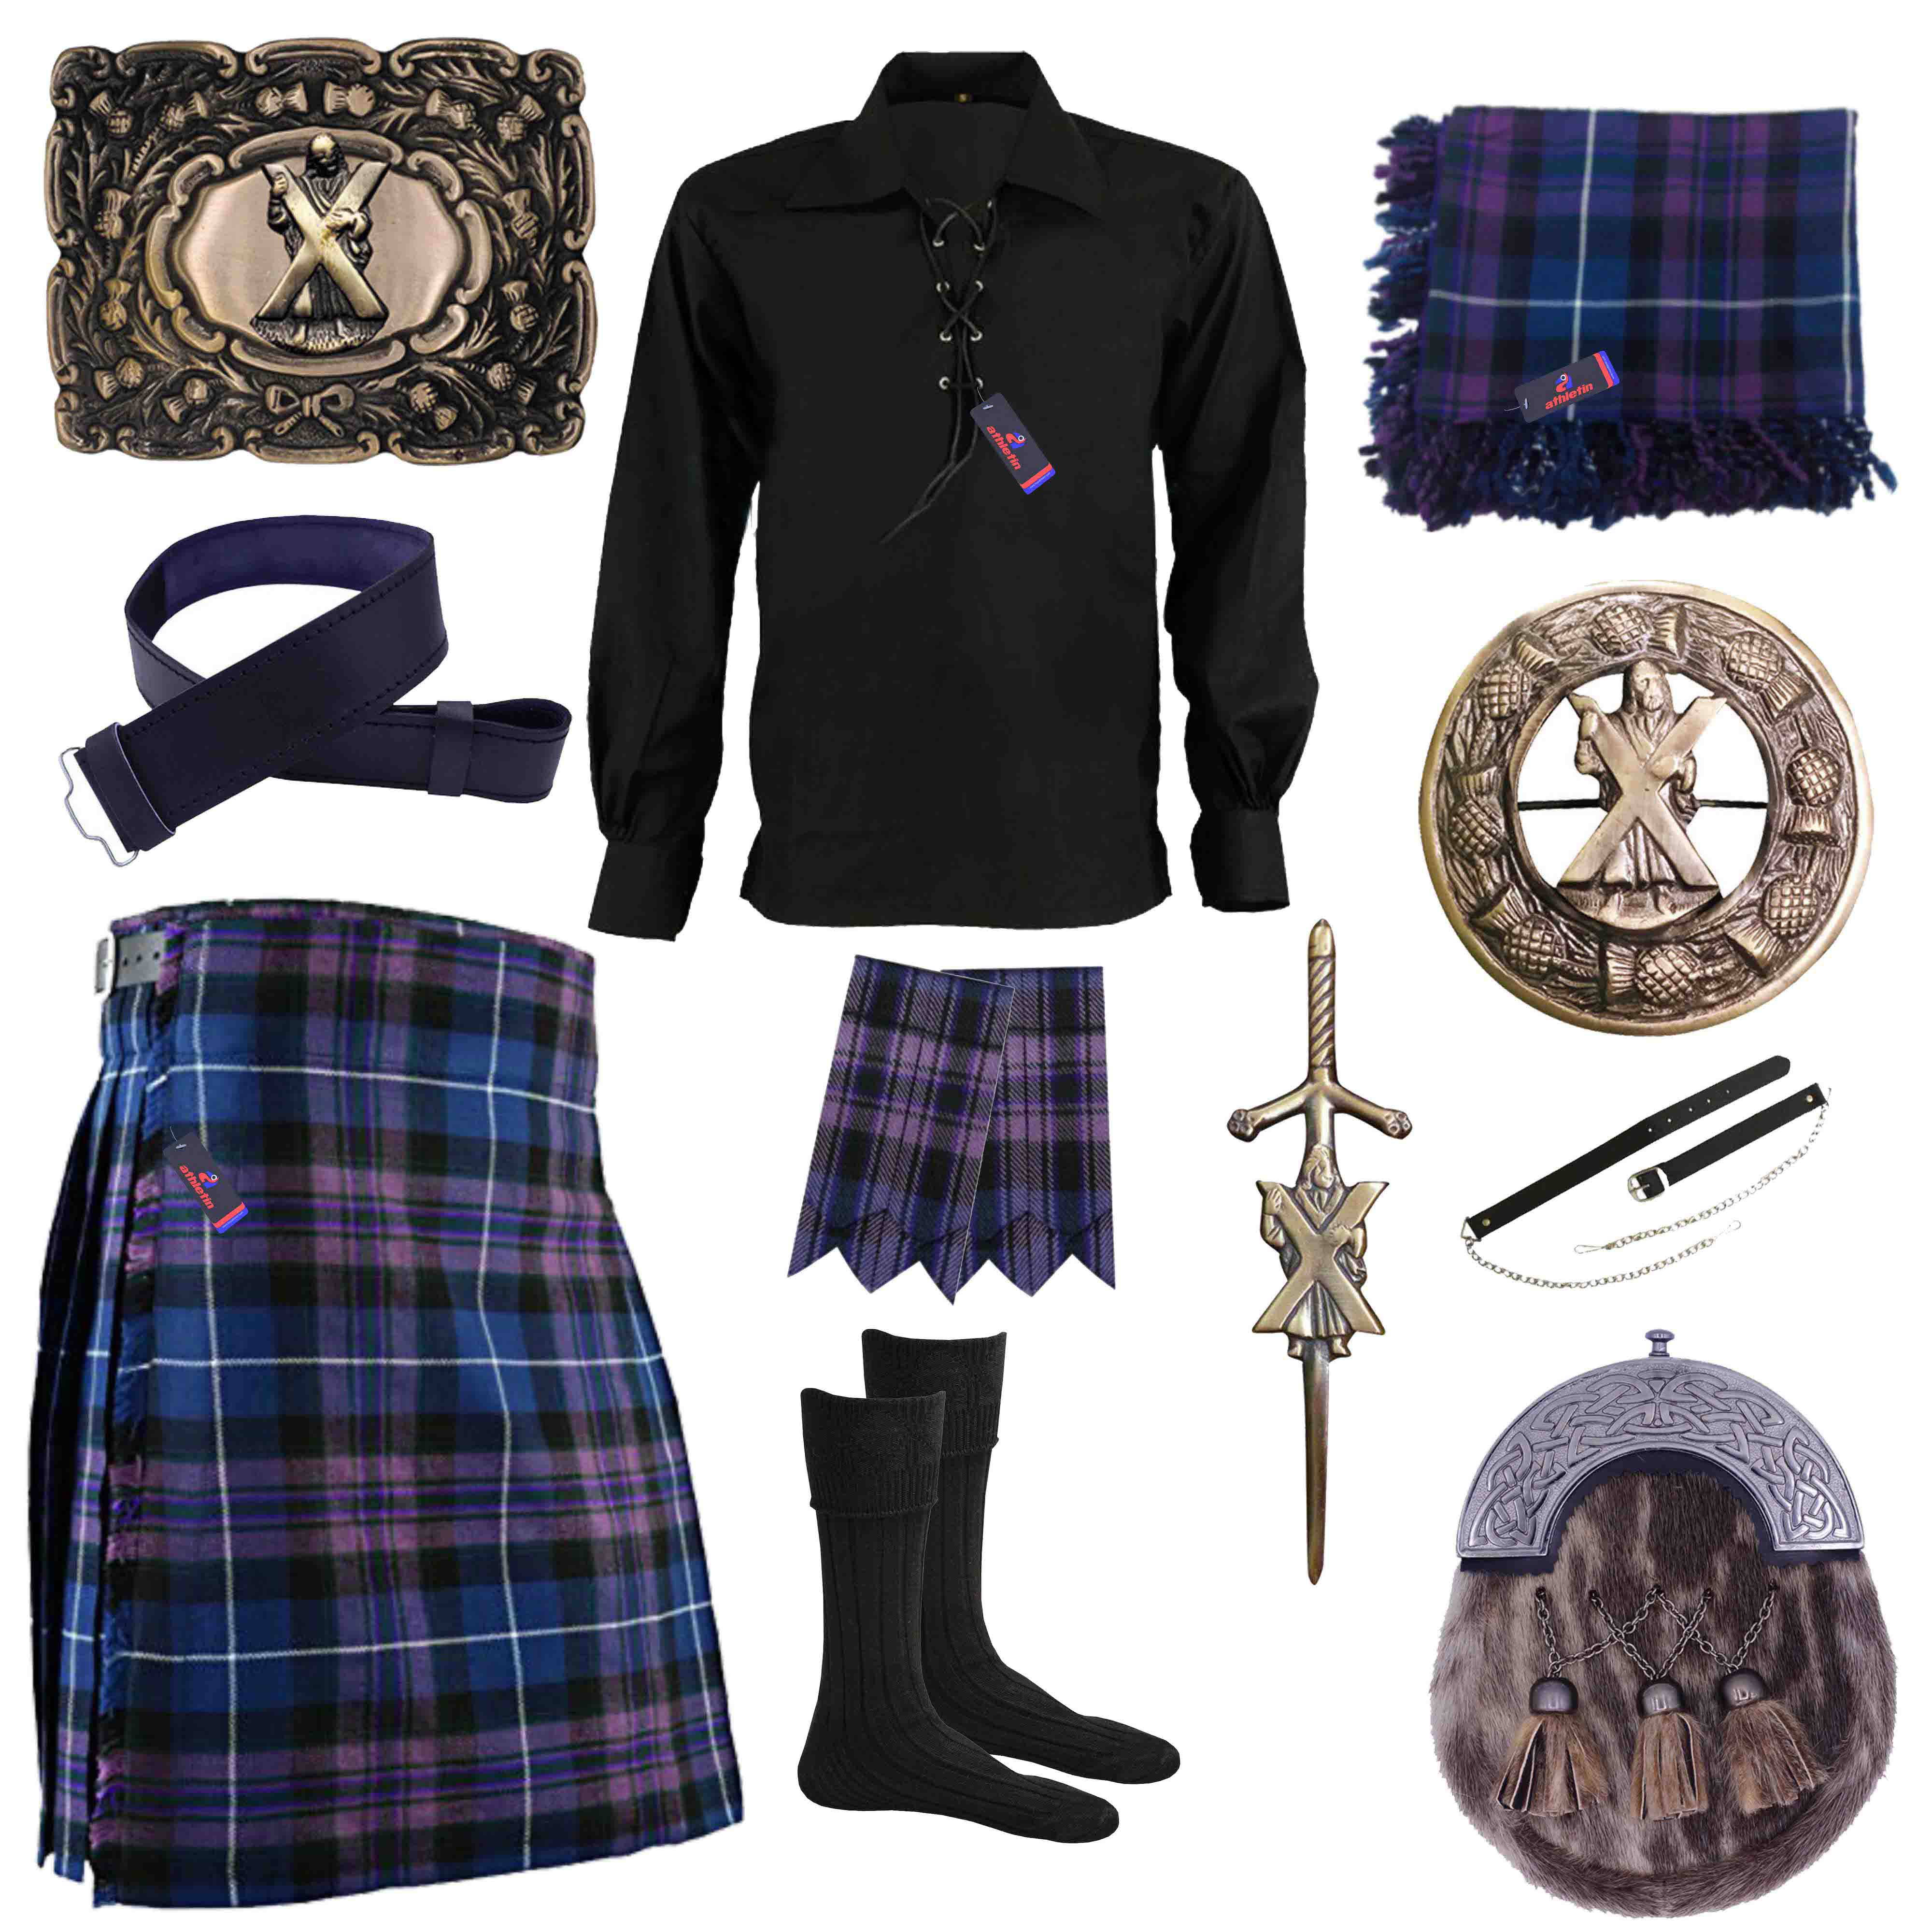 Men's Pride Of Scotland 5 Yard Highland Tartan Kilt 3 Pcs Set With Accessories 